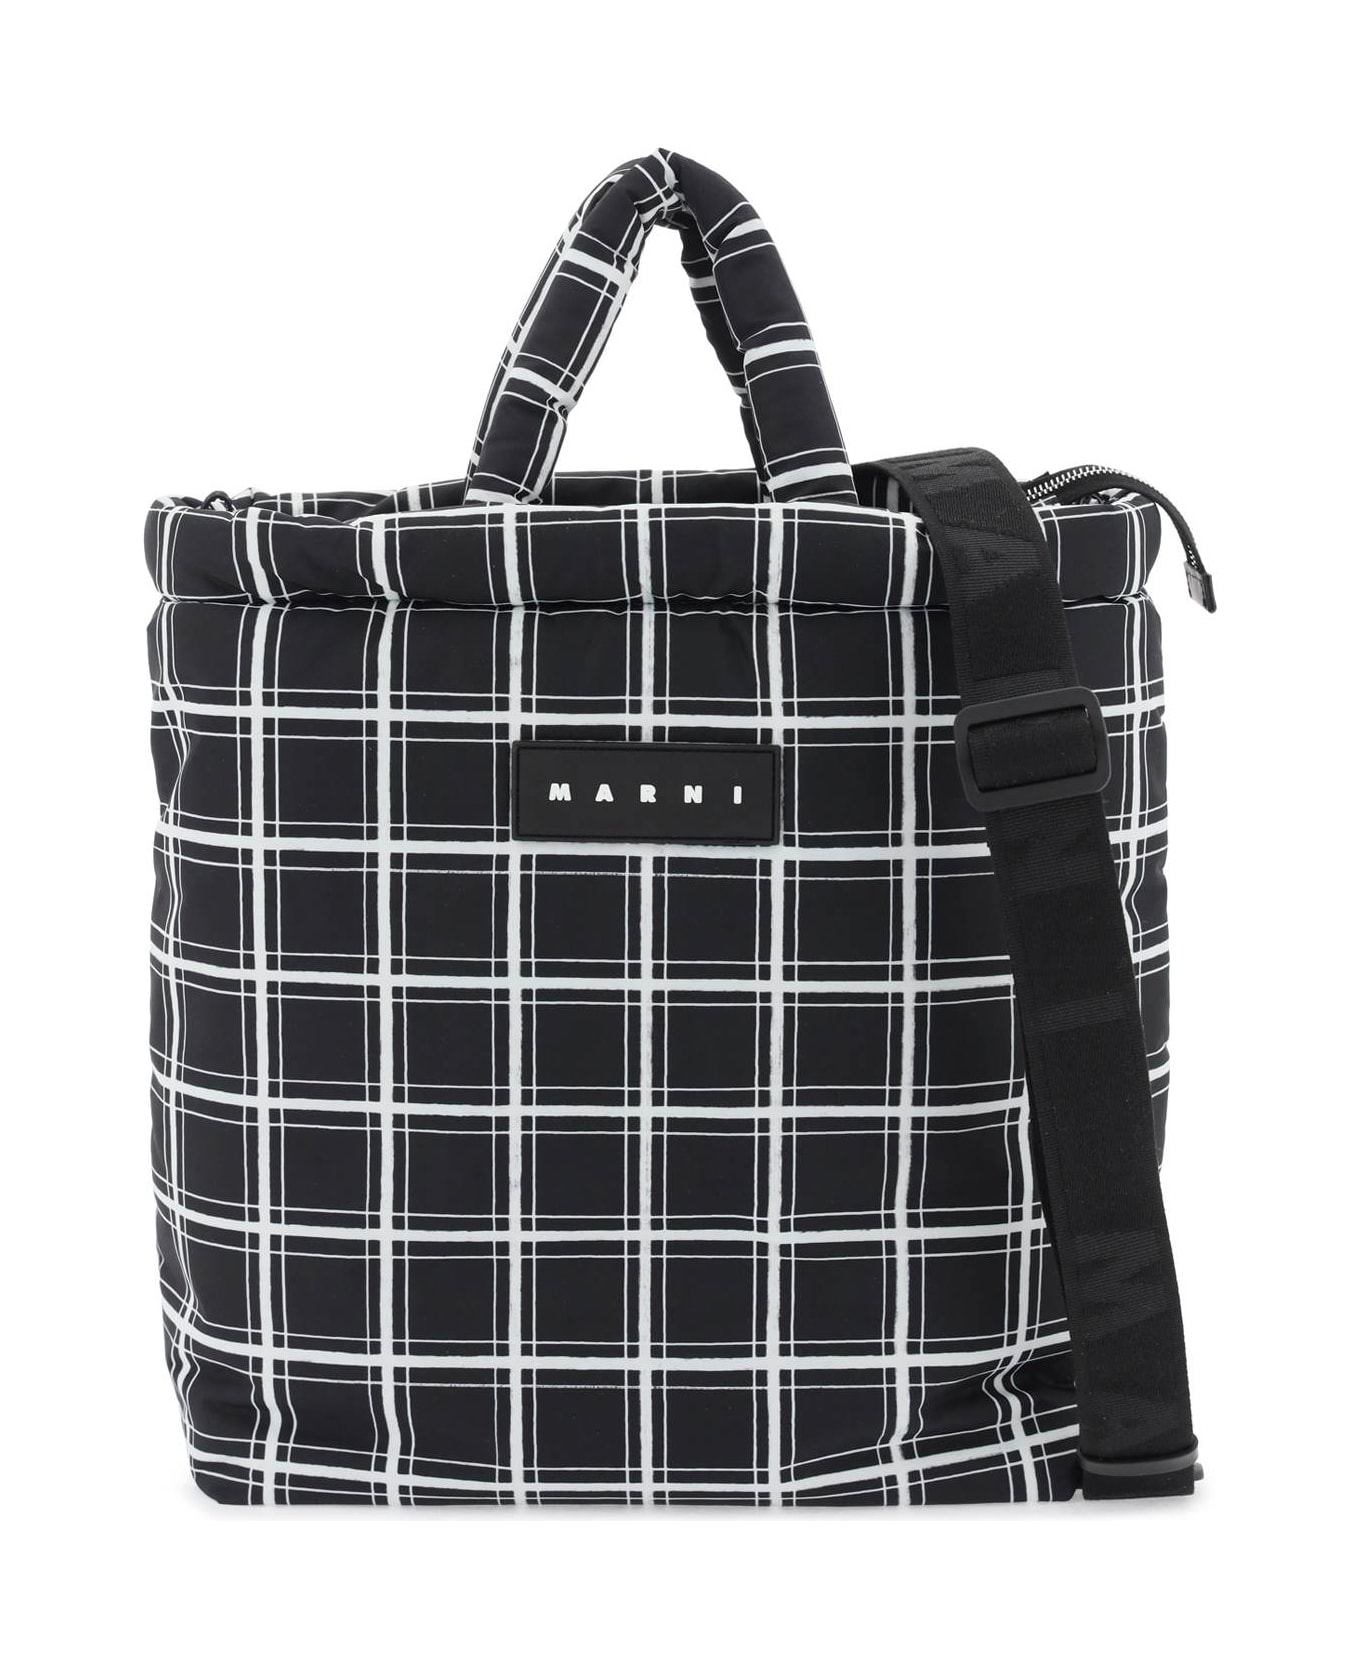 Marni Check Tote Bag - BLACK (White)